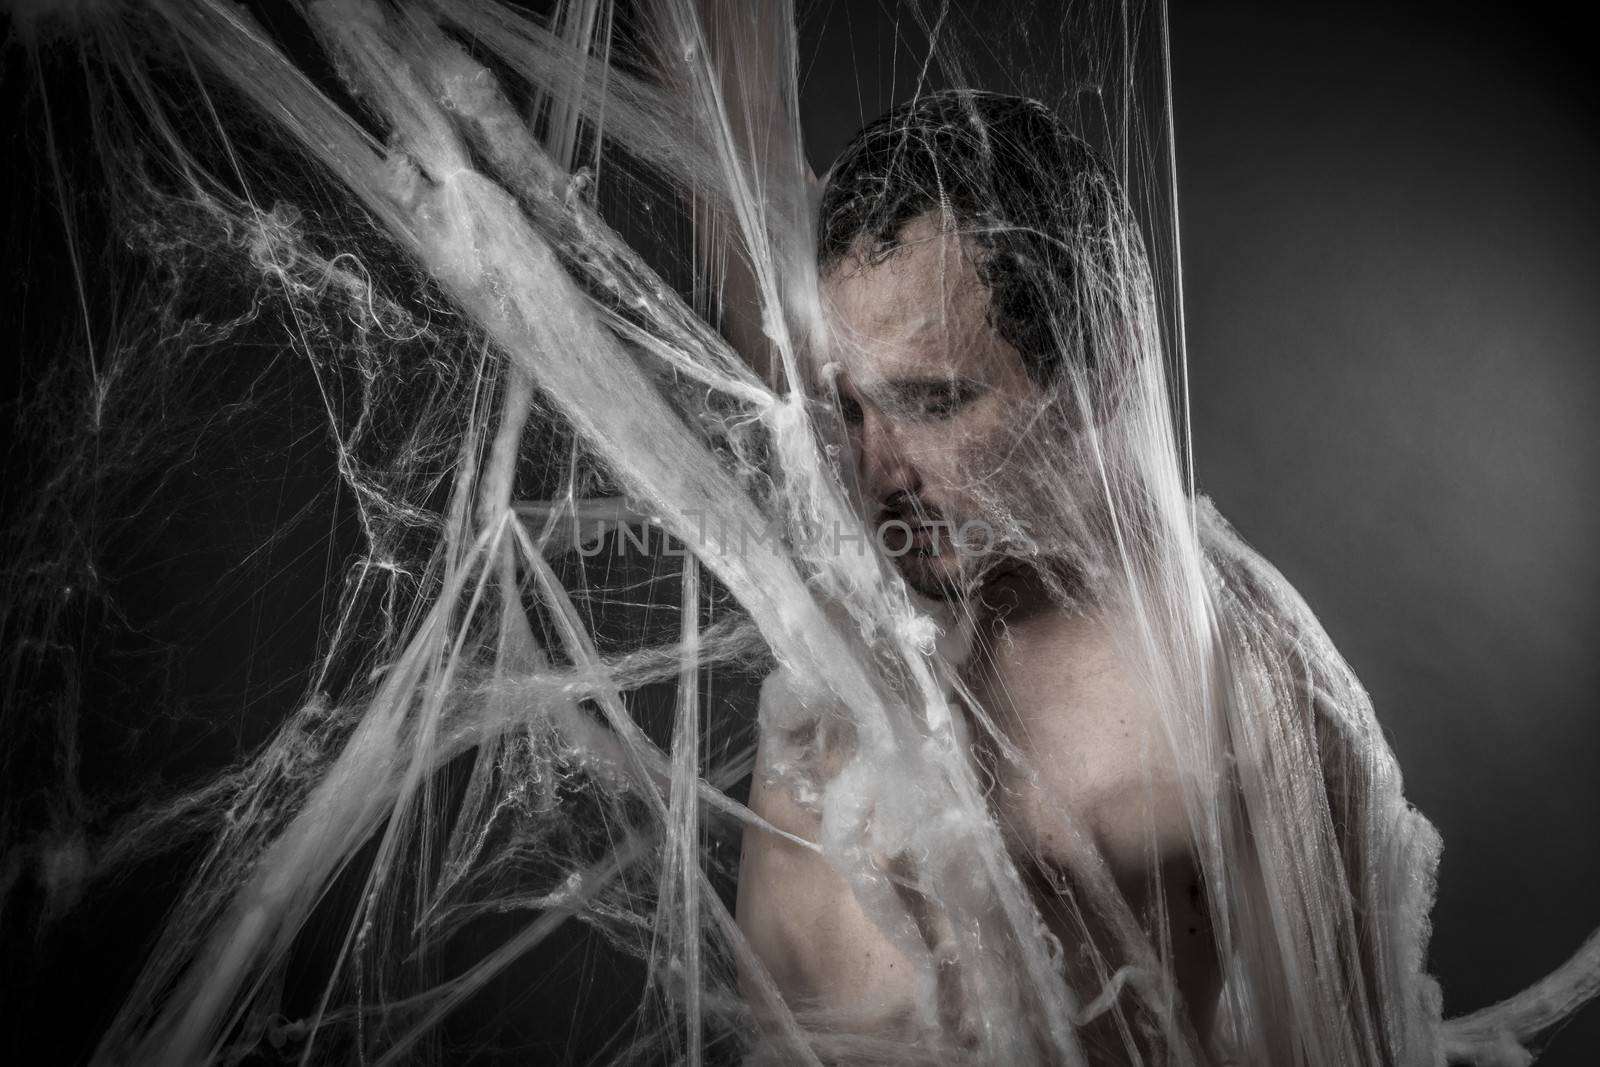 Internet.man tangled in huge white spider web by FernandoCortes